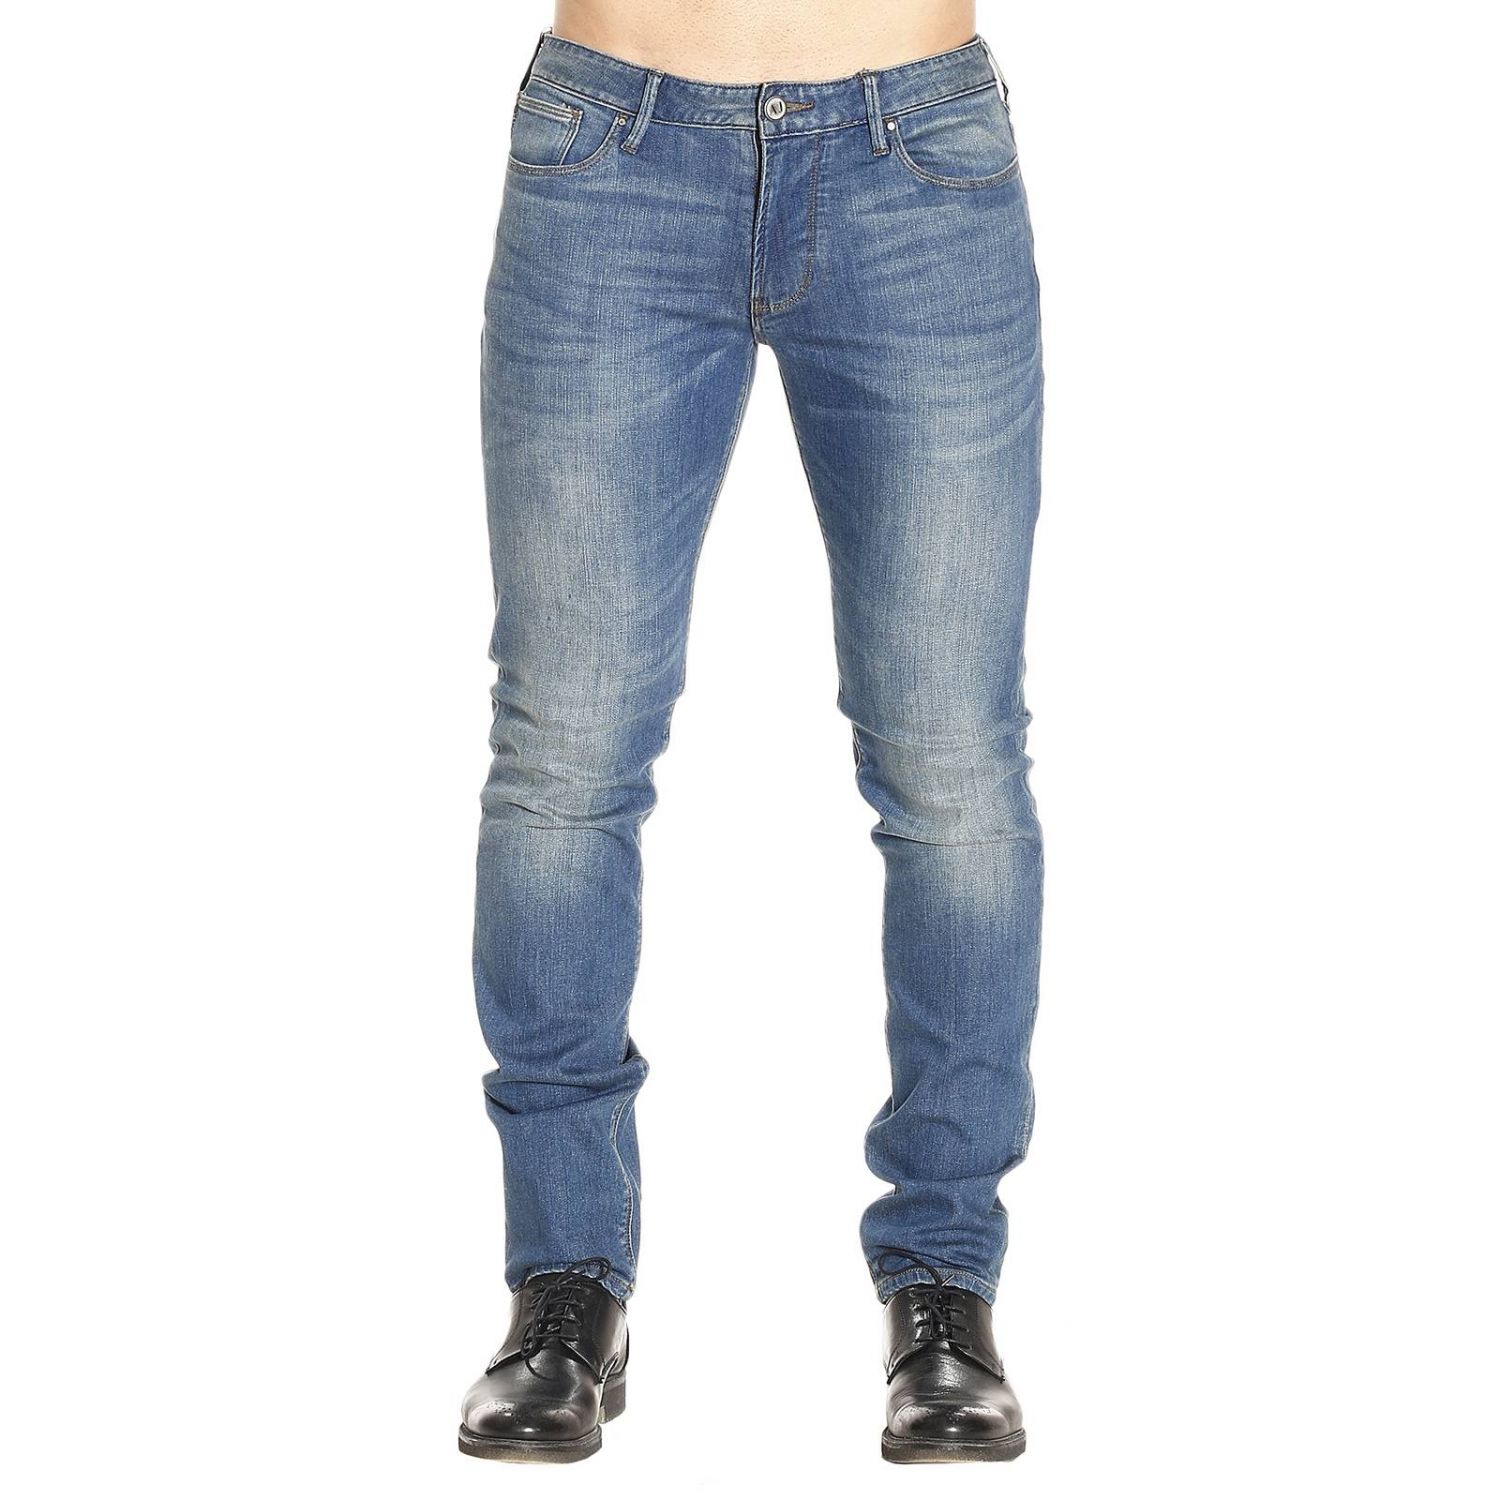 Jeans men Armani Jeans | Jeans Armani Jeans Men Denim | Jeans Armani ...